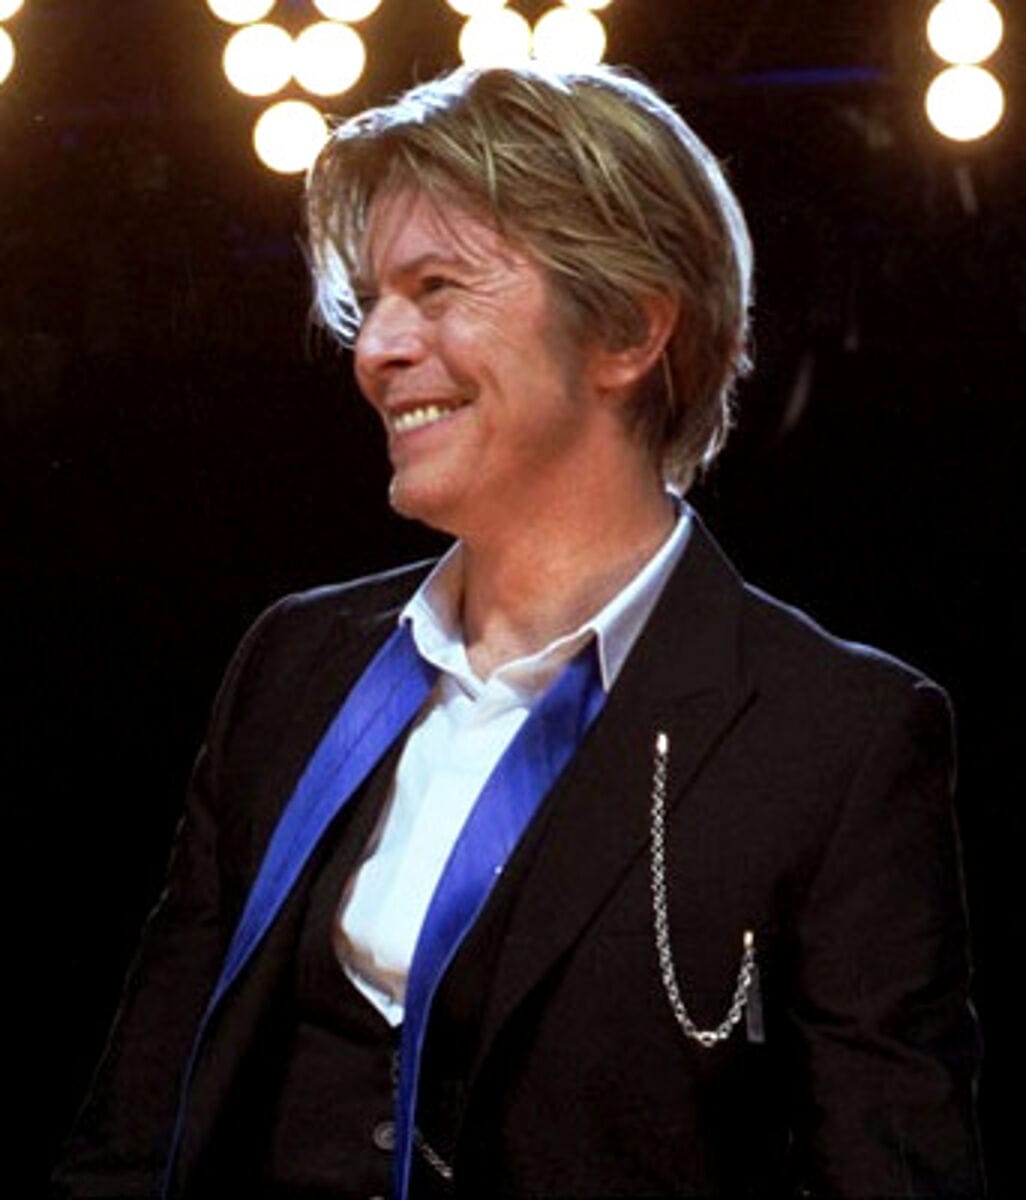 David Bowie net worth in Celebrities category